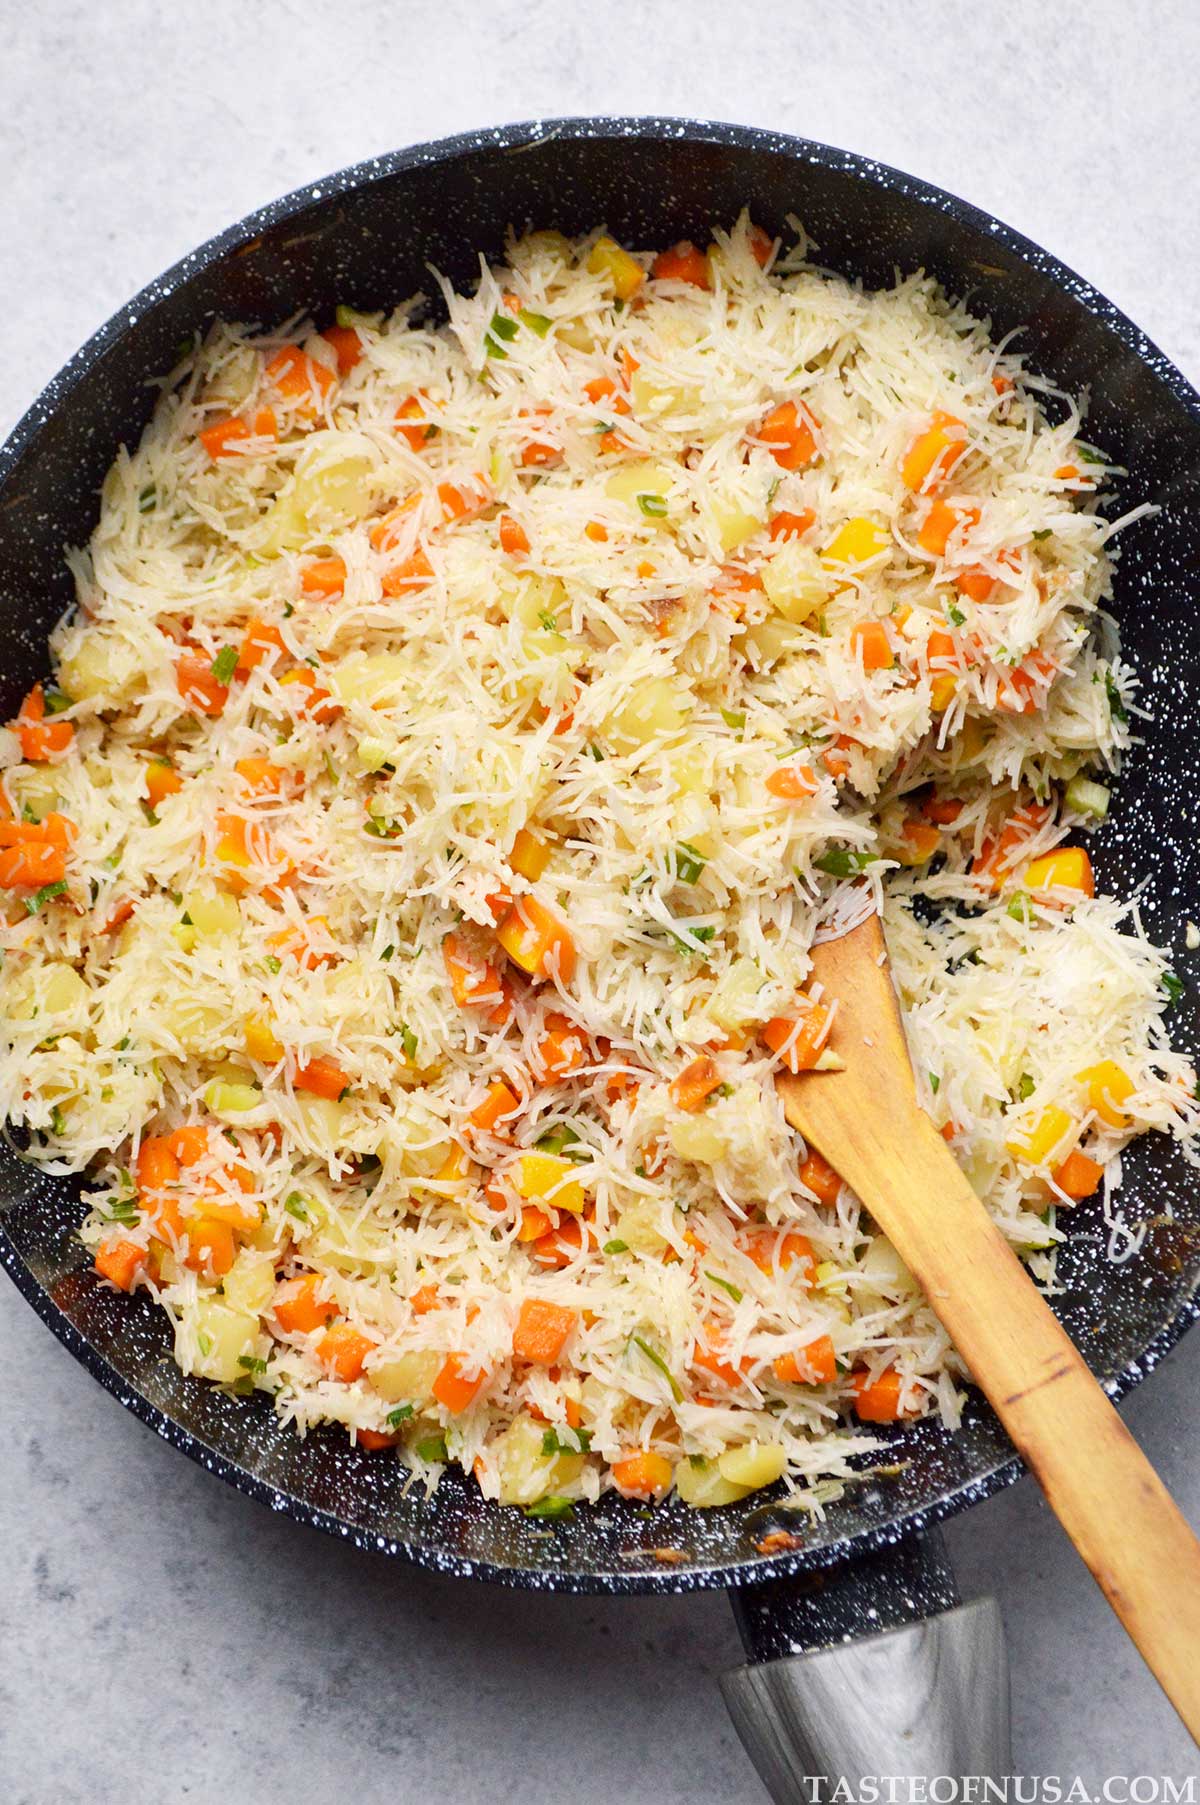 stir fried vermicelli, carrot, potato